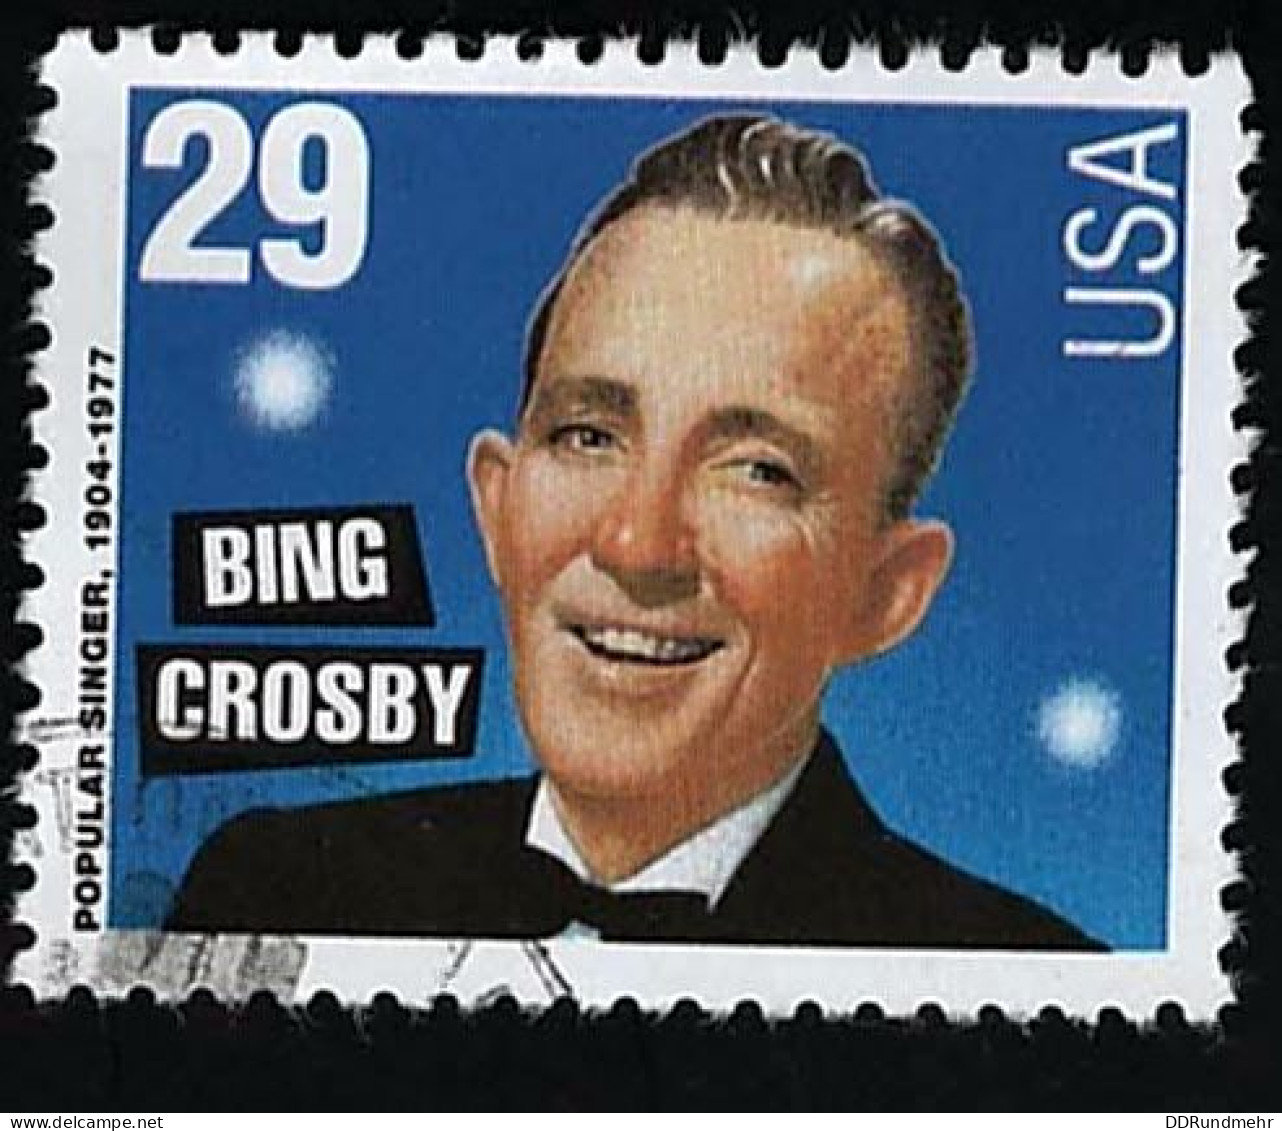 1994 Bing Crosby  Michel US 2487 Stamp Number US 2850 Yvert Et Tellier US 2269 Stanley Gibbons US 2931 Used - Used Stamps